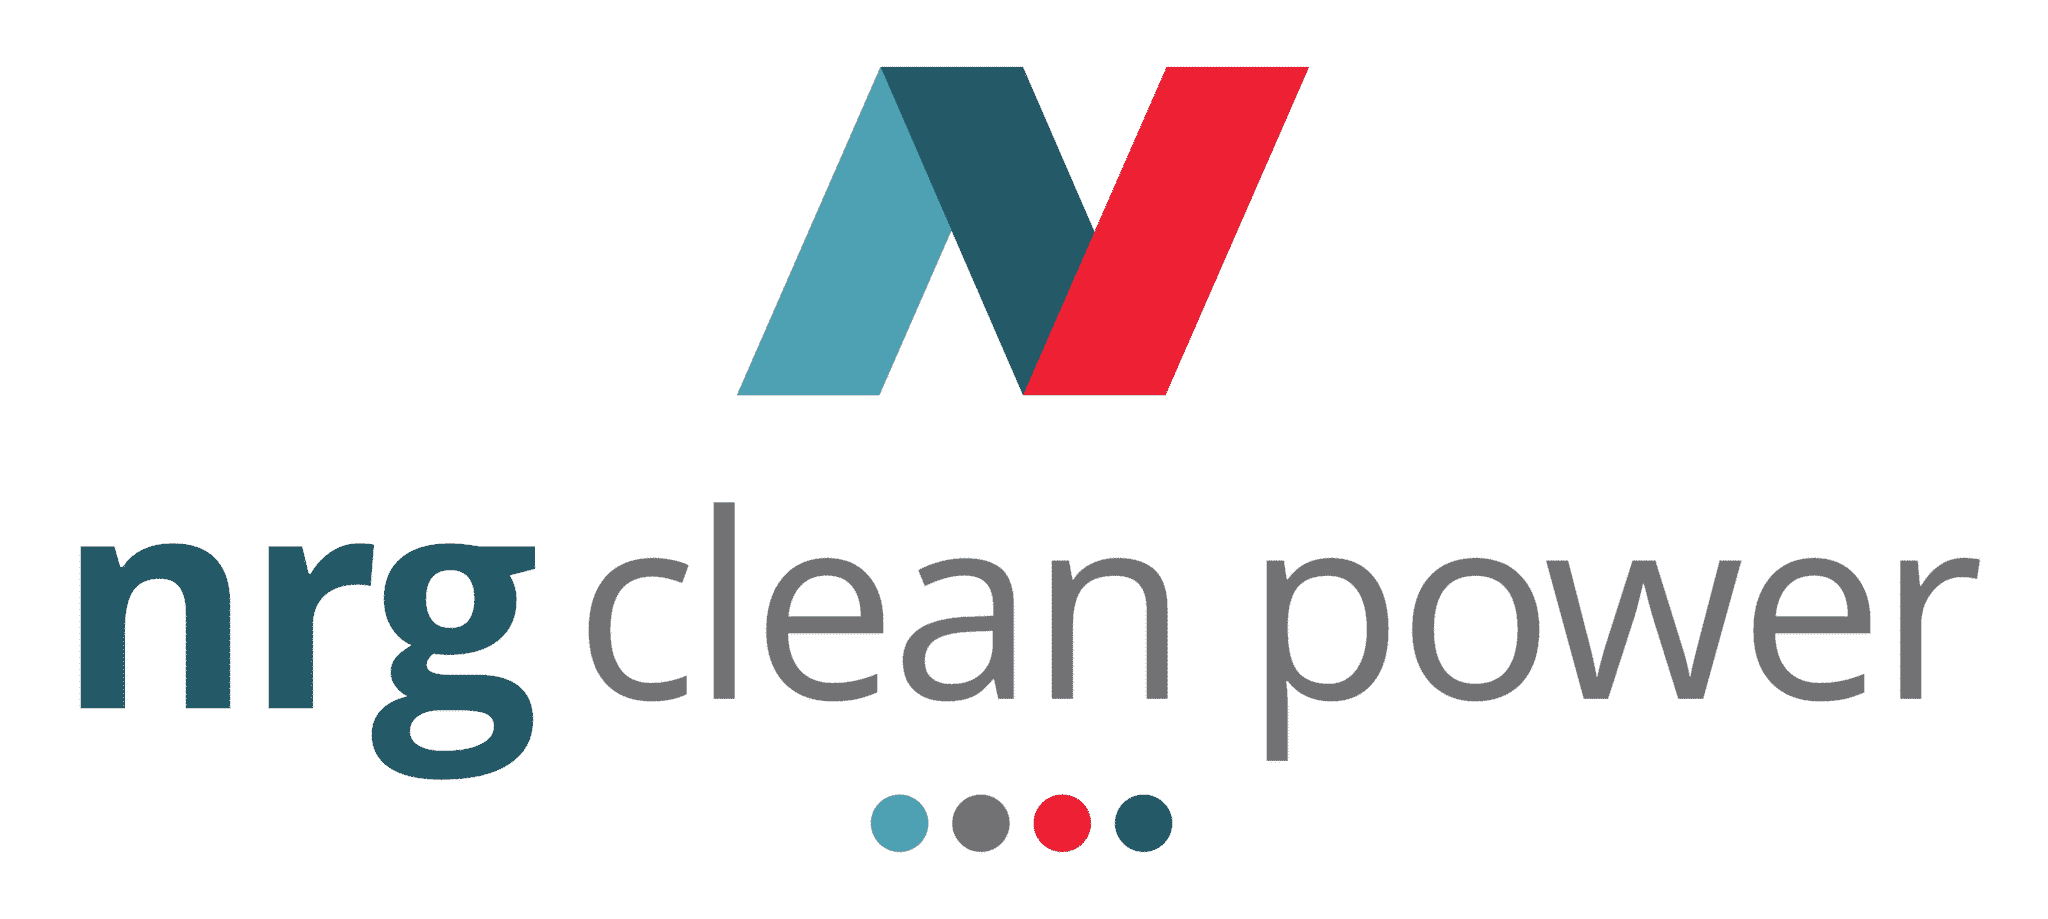 NRG Clean Power Logo